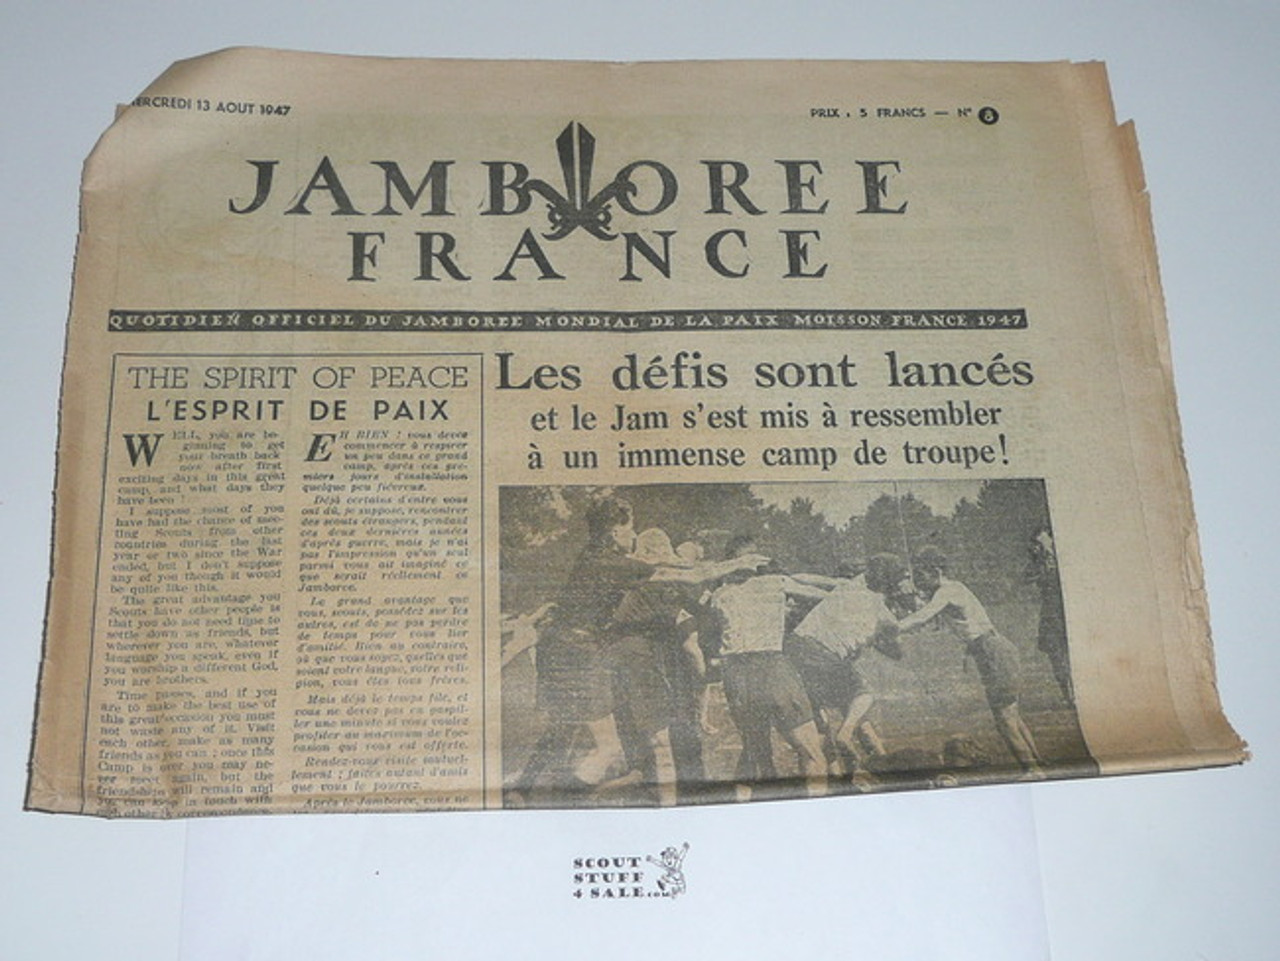 1947 World Jamboree Newspaper, August 13